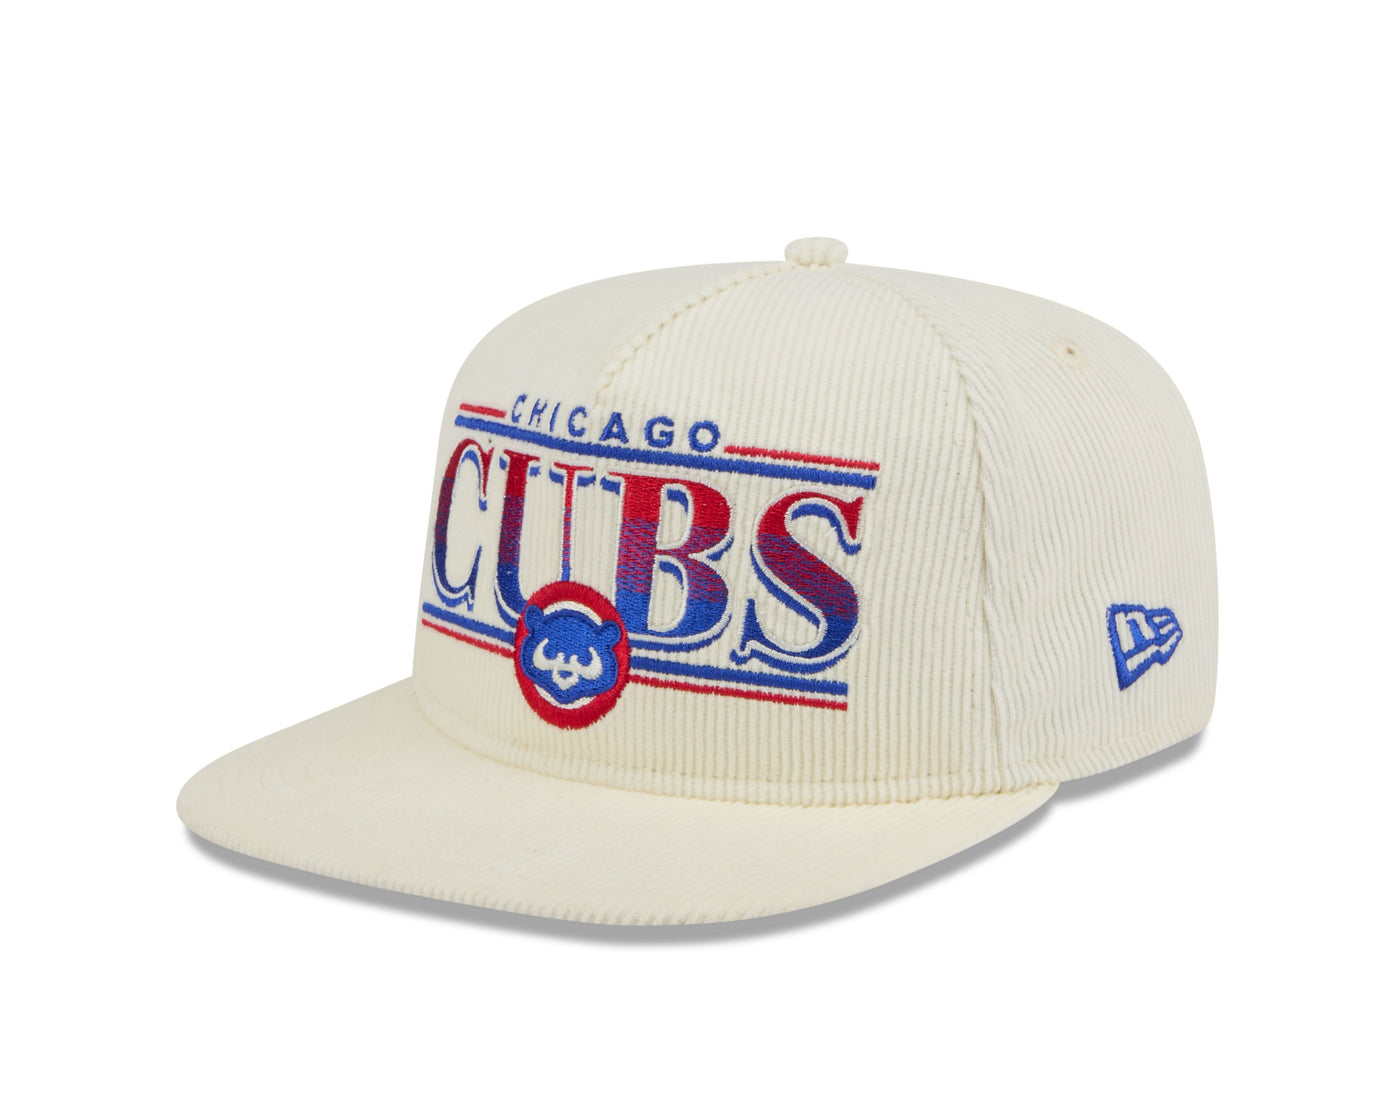 CHICAGO CUBS NEW ERA 1984 THROWBACK CORDUROY SNAPBACK